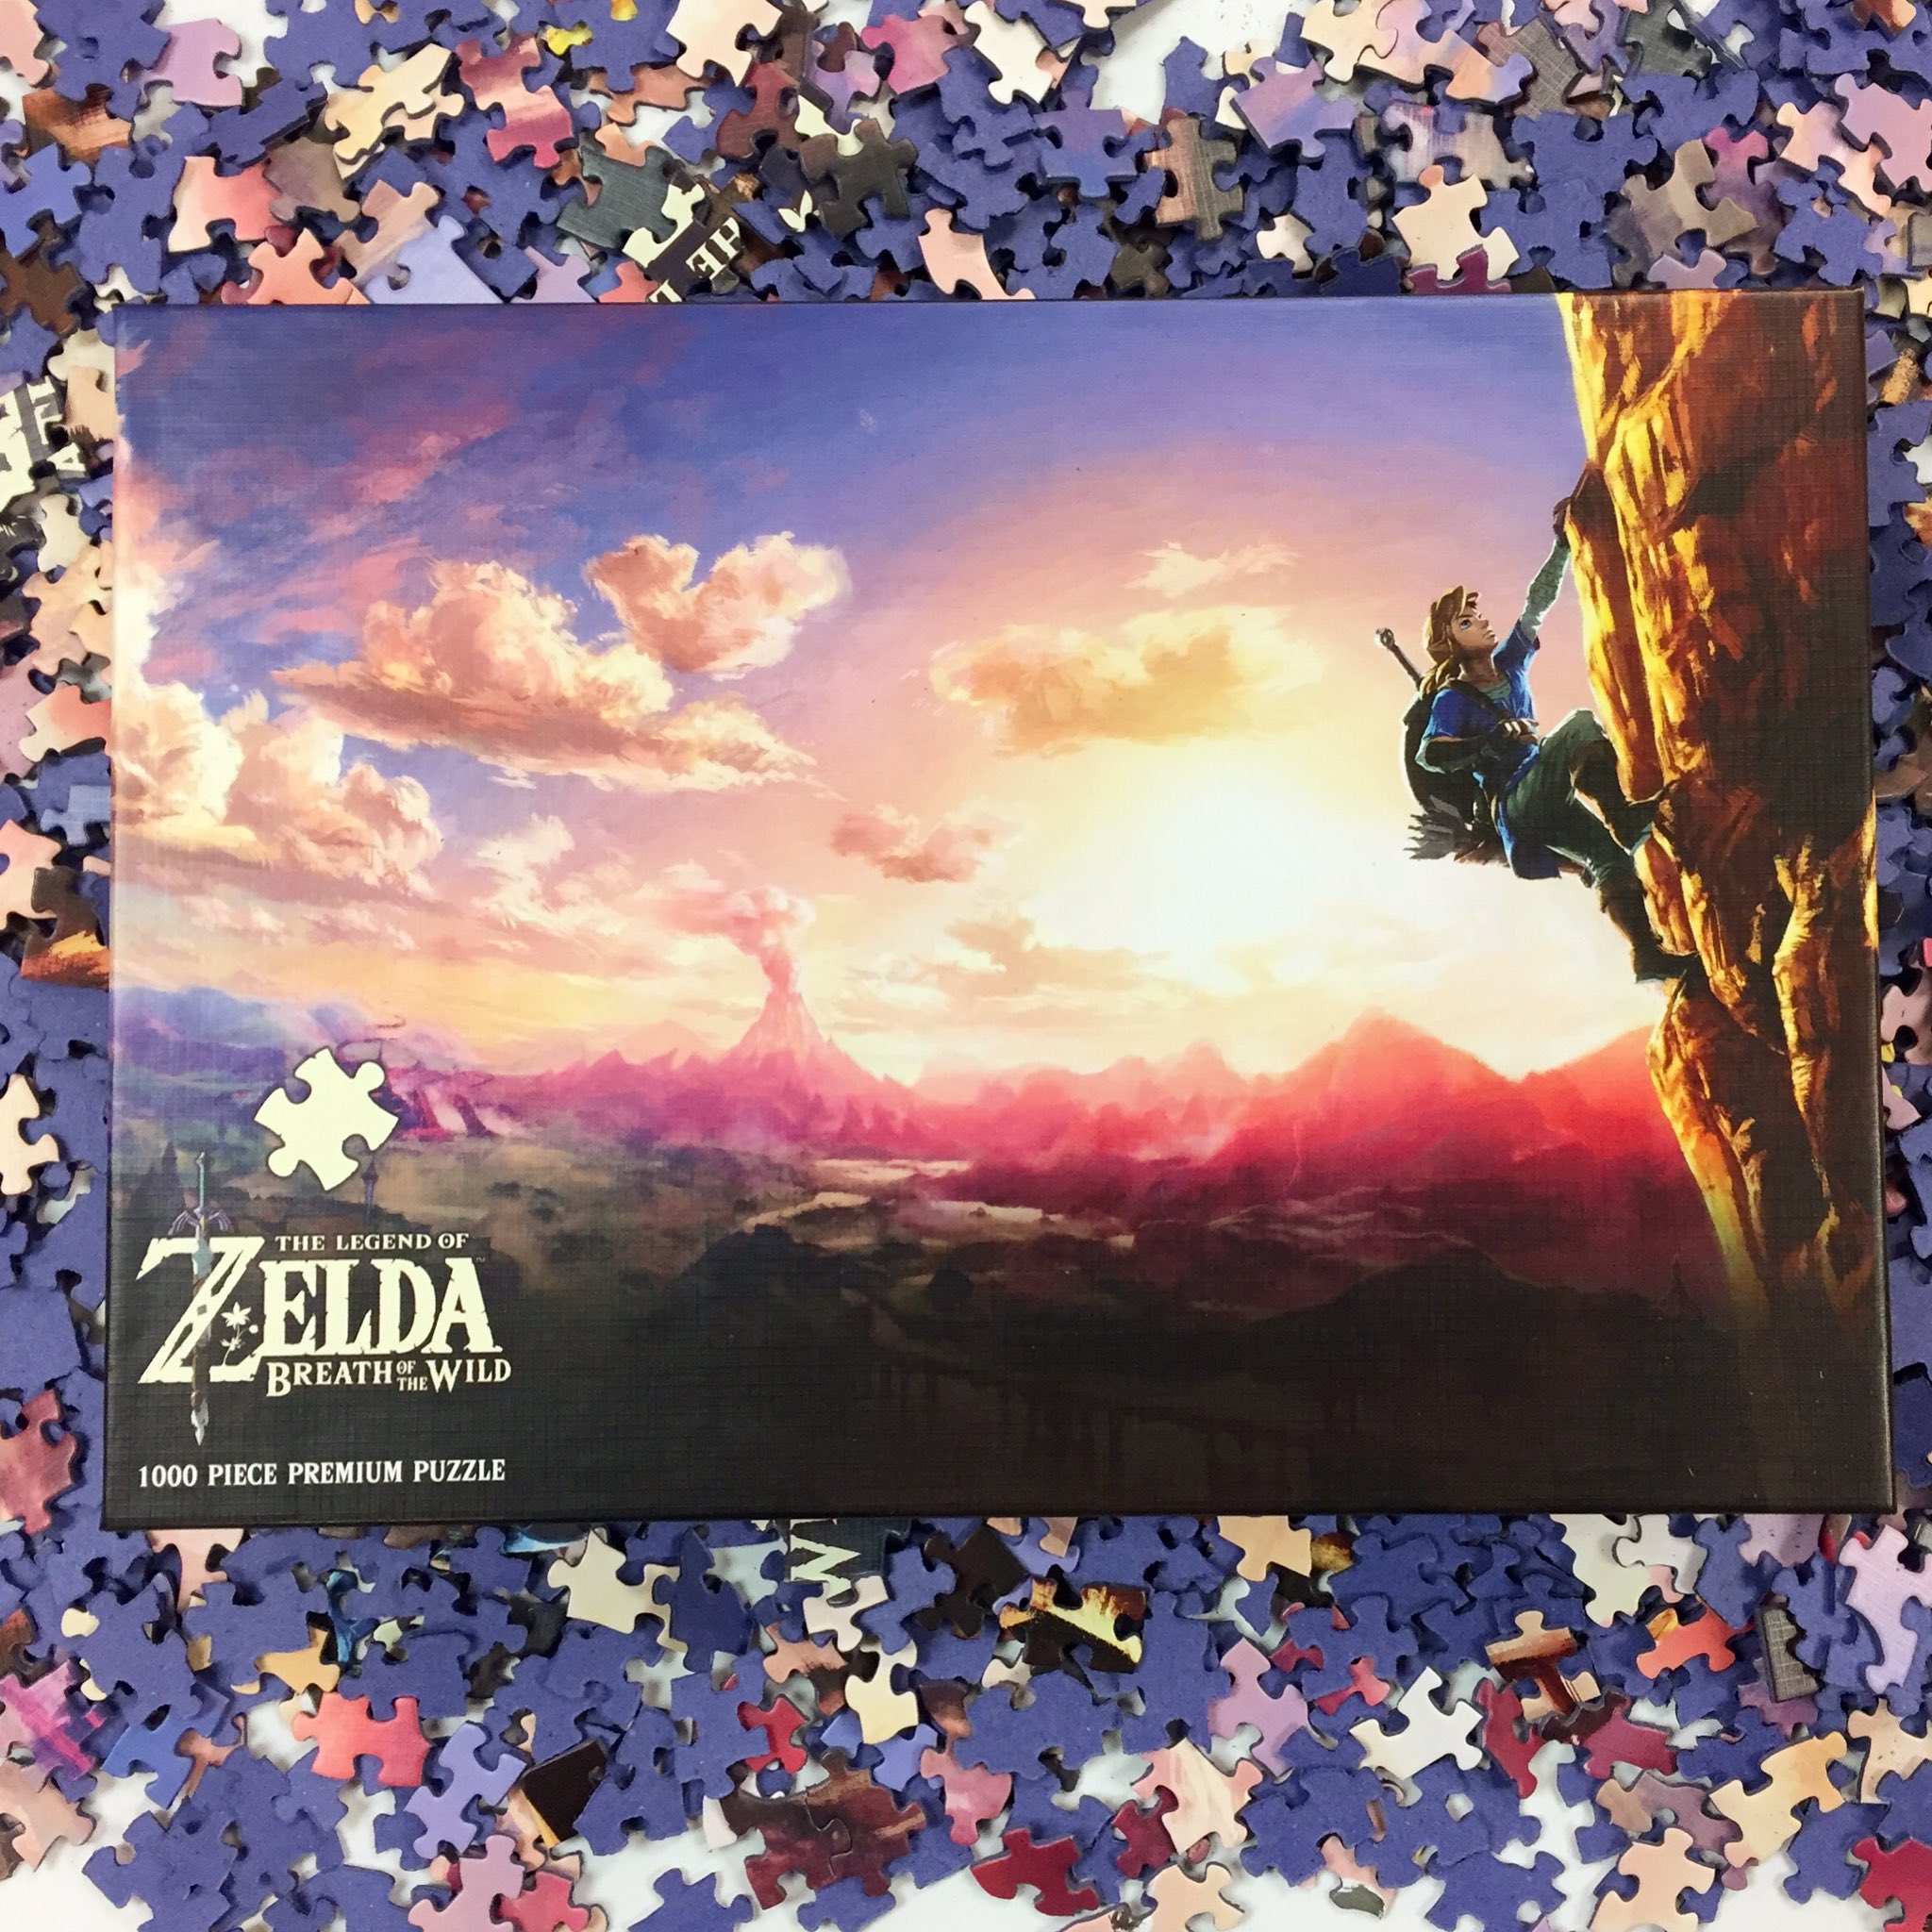 Nintendo NY on X: This 1000 piece premium puzzle features art